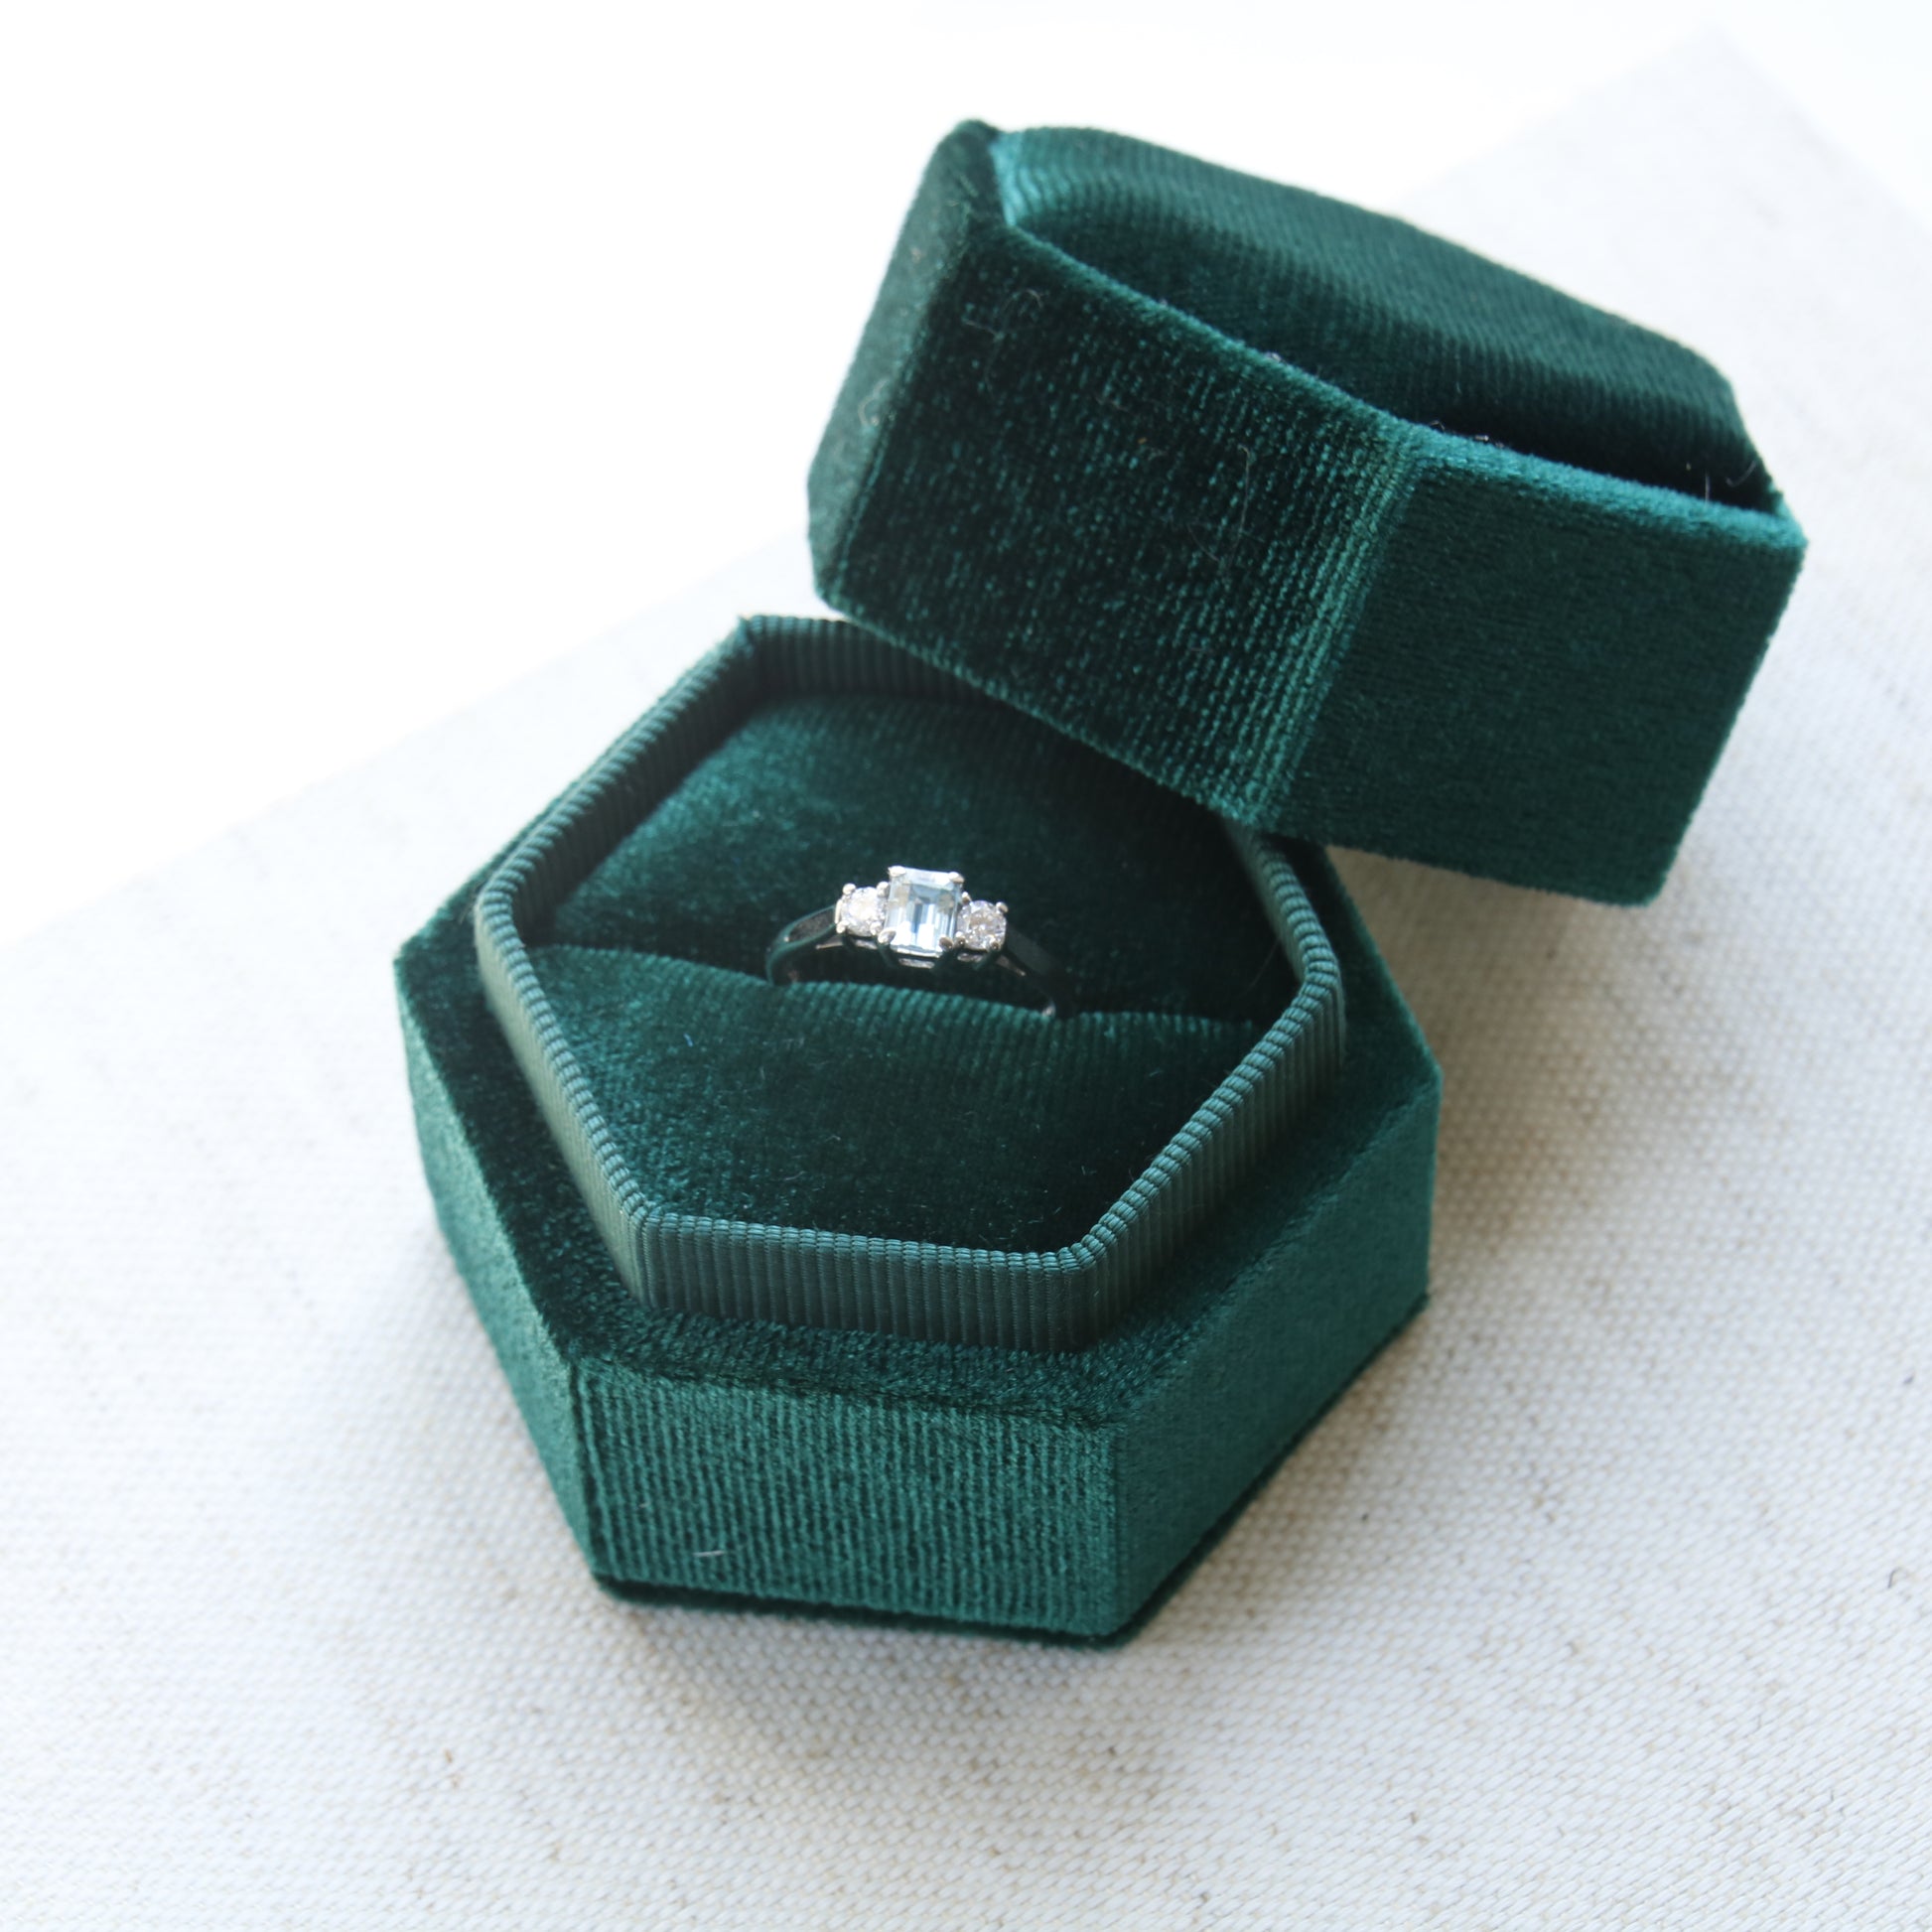 Preowned secondhand aquamarine and diamond three stone ring. 